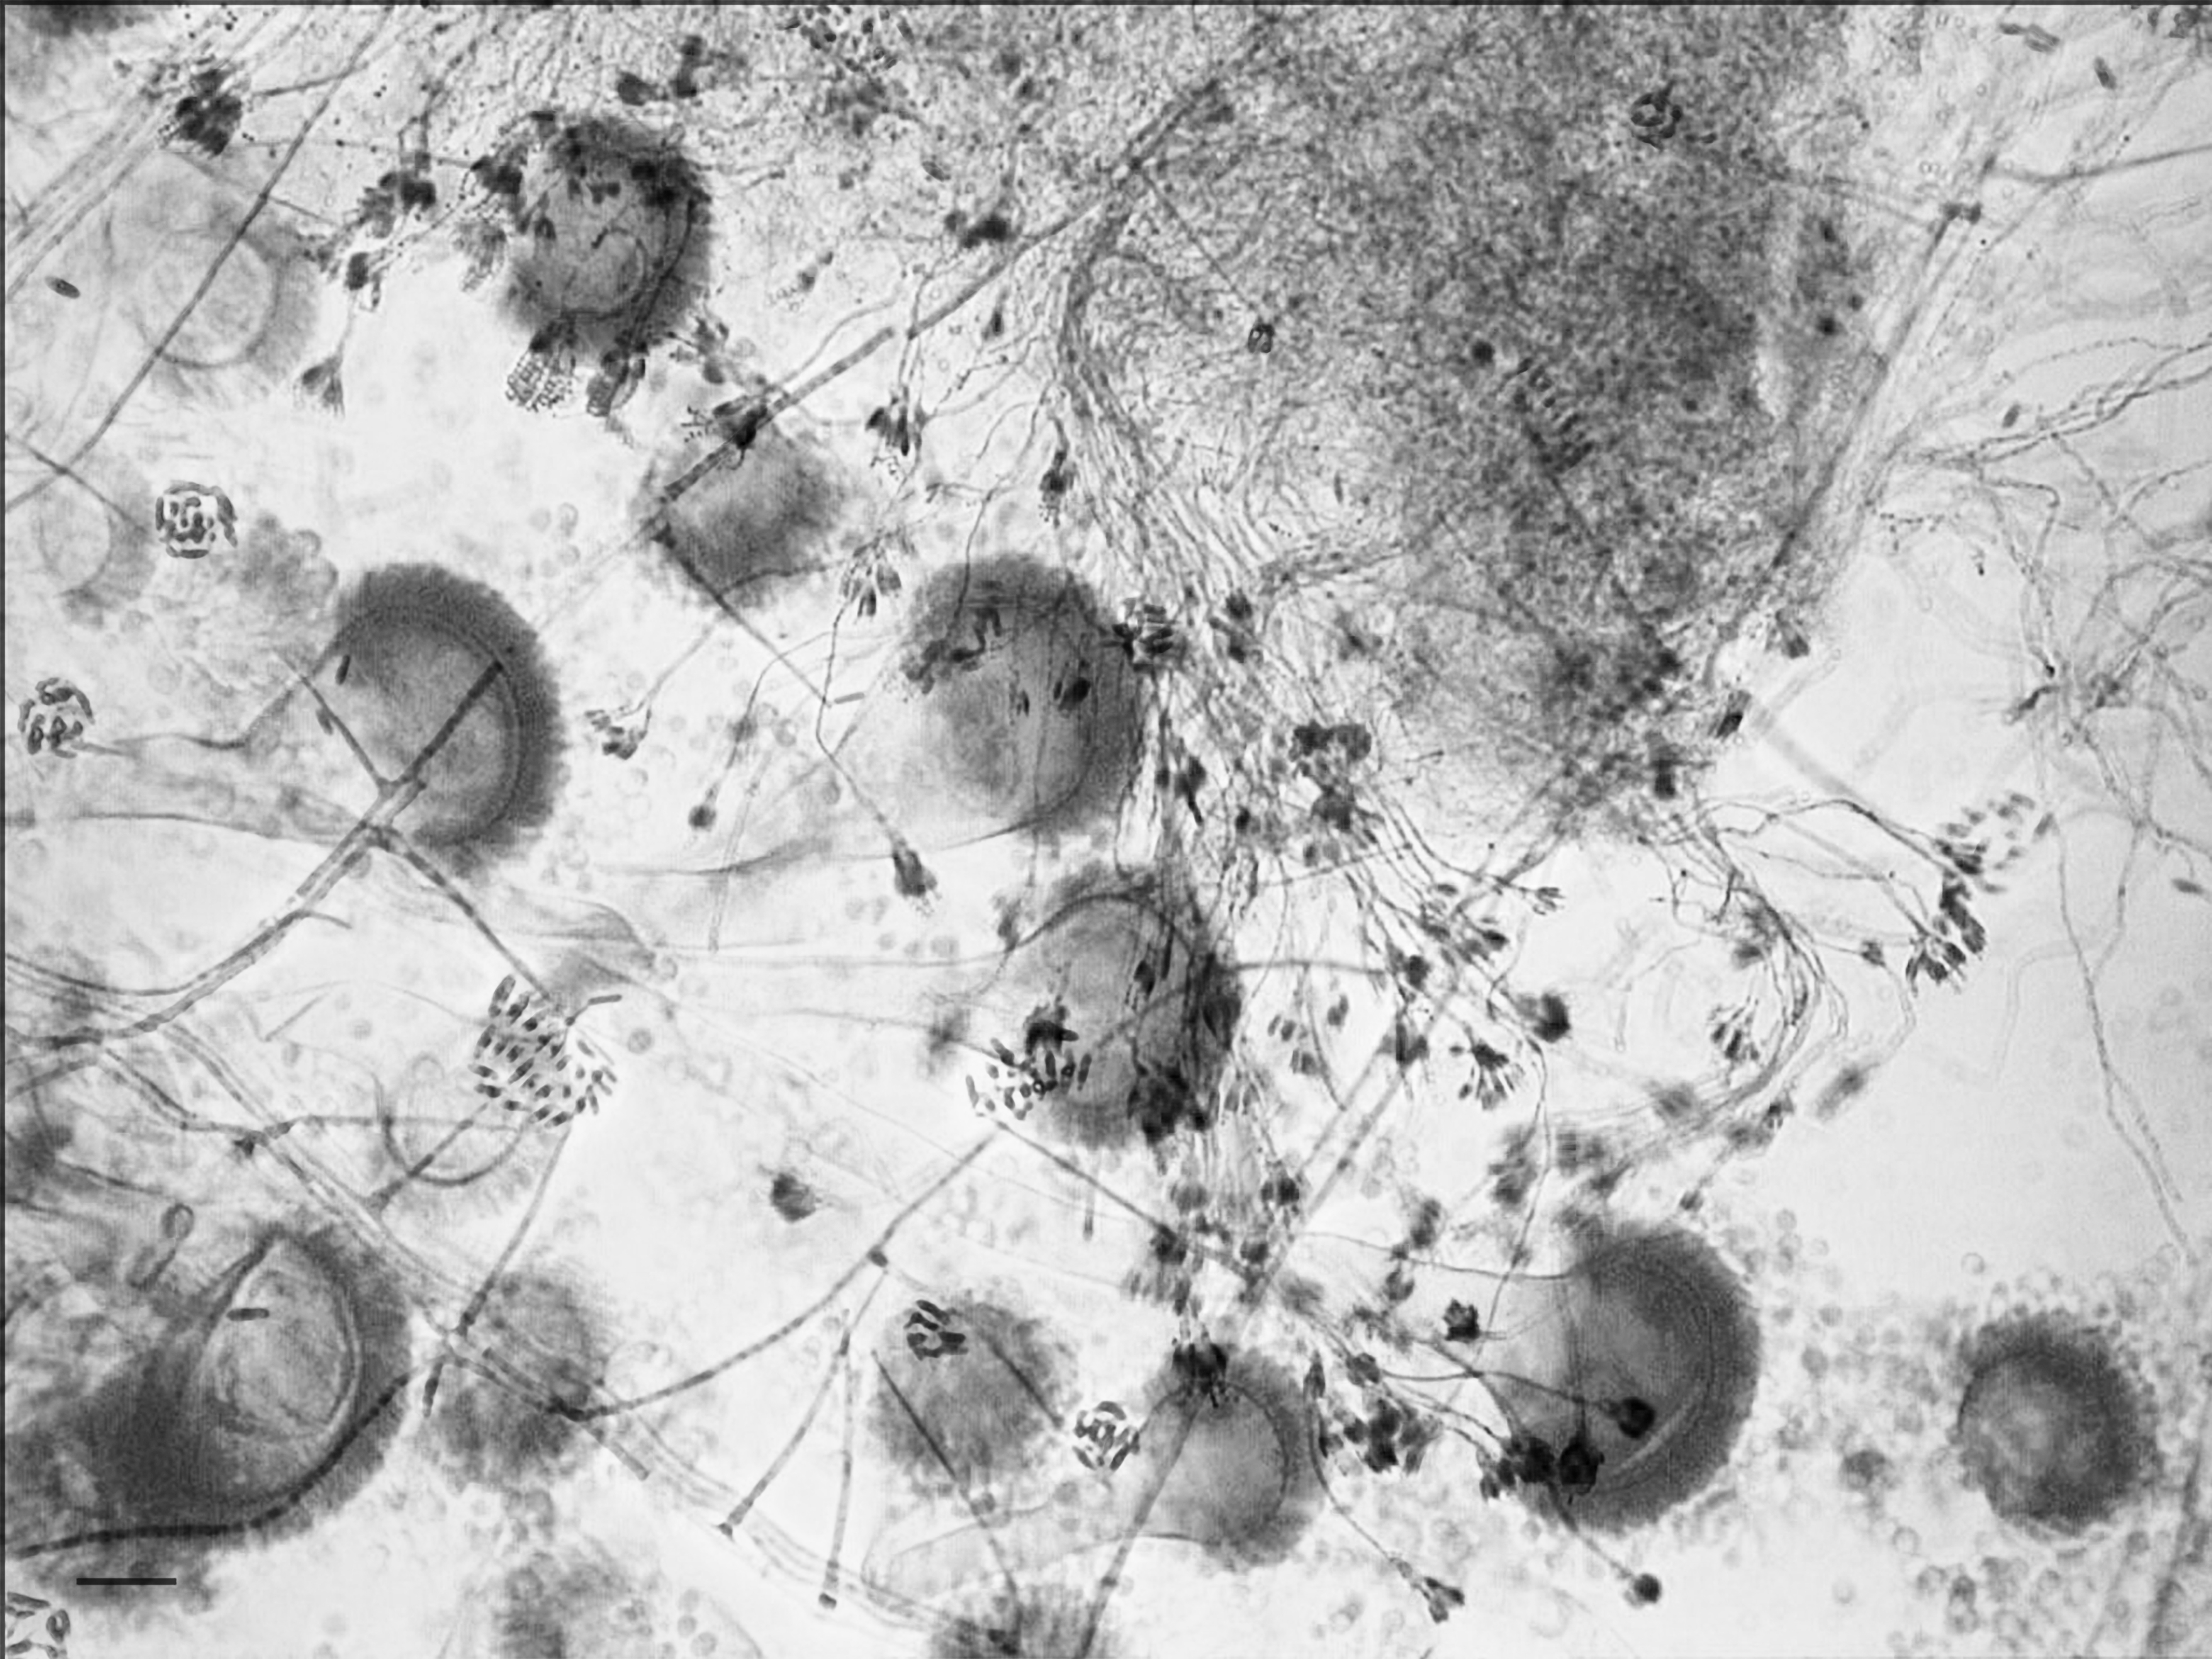 A collage of three microscopic views of moulds: Rhizopus, Penicillium, and Aspergillus.